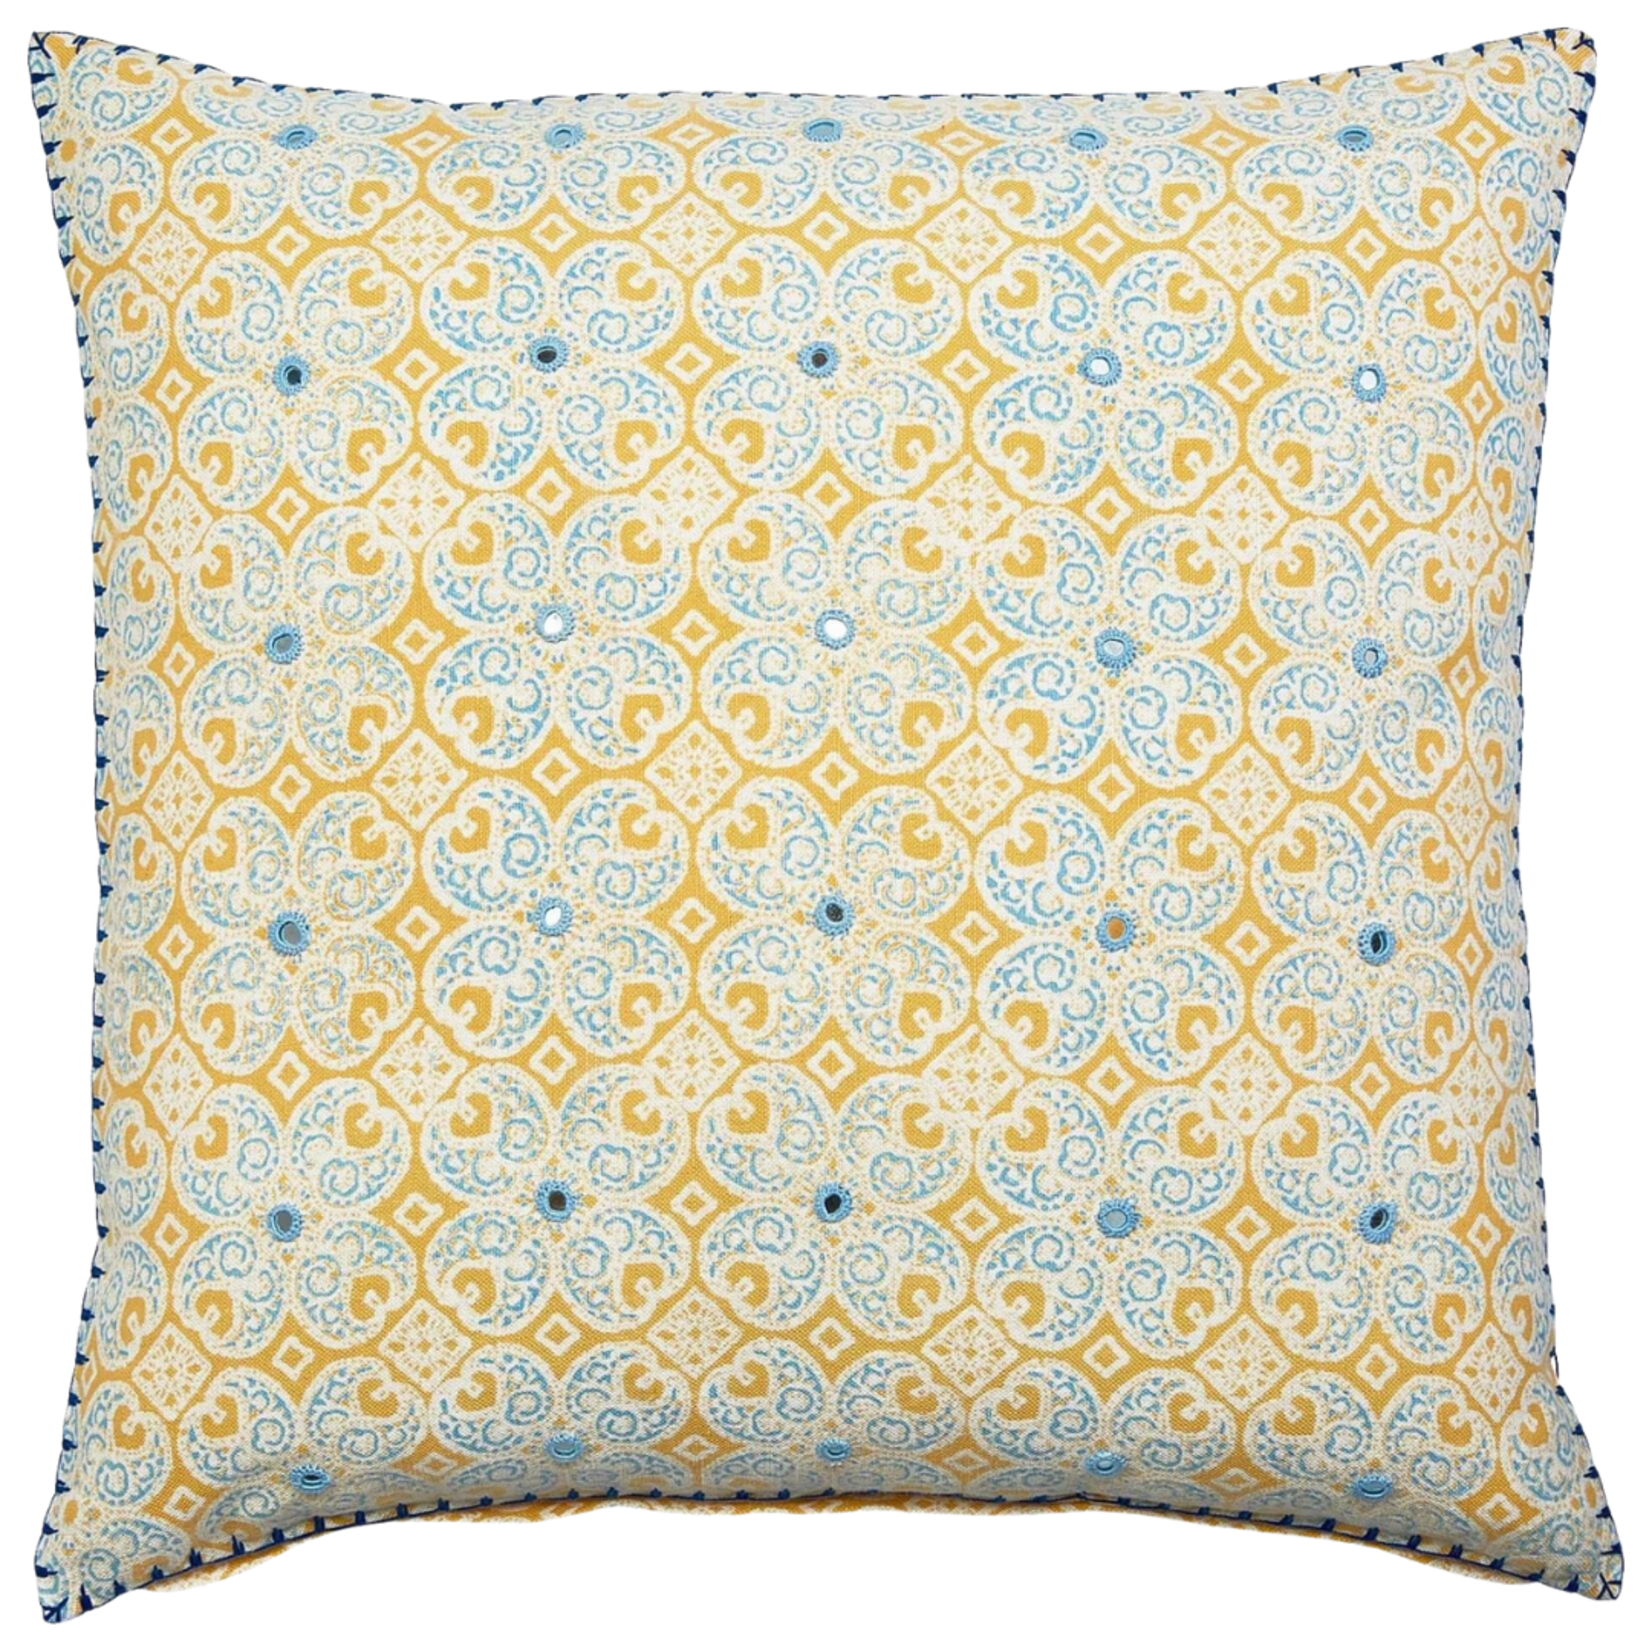 John Robshaw 22 x22 Decorative Pillow